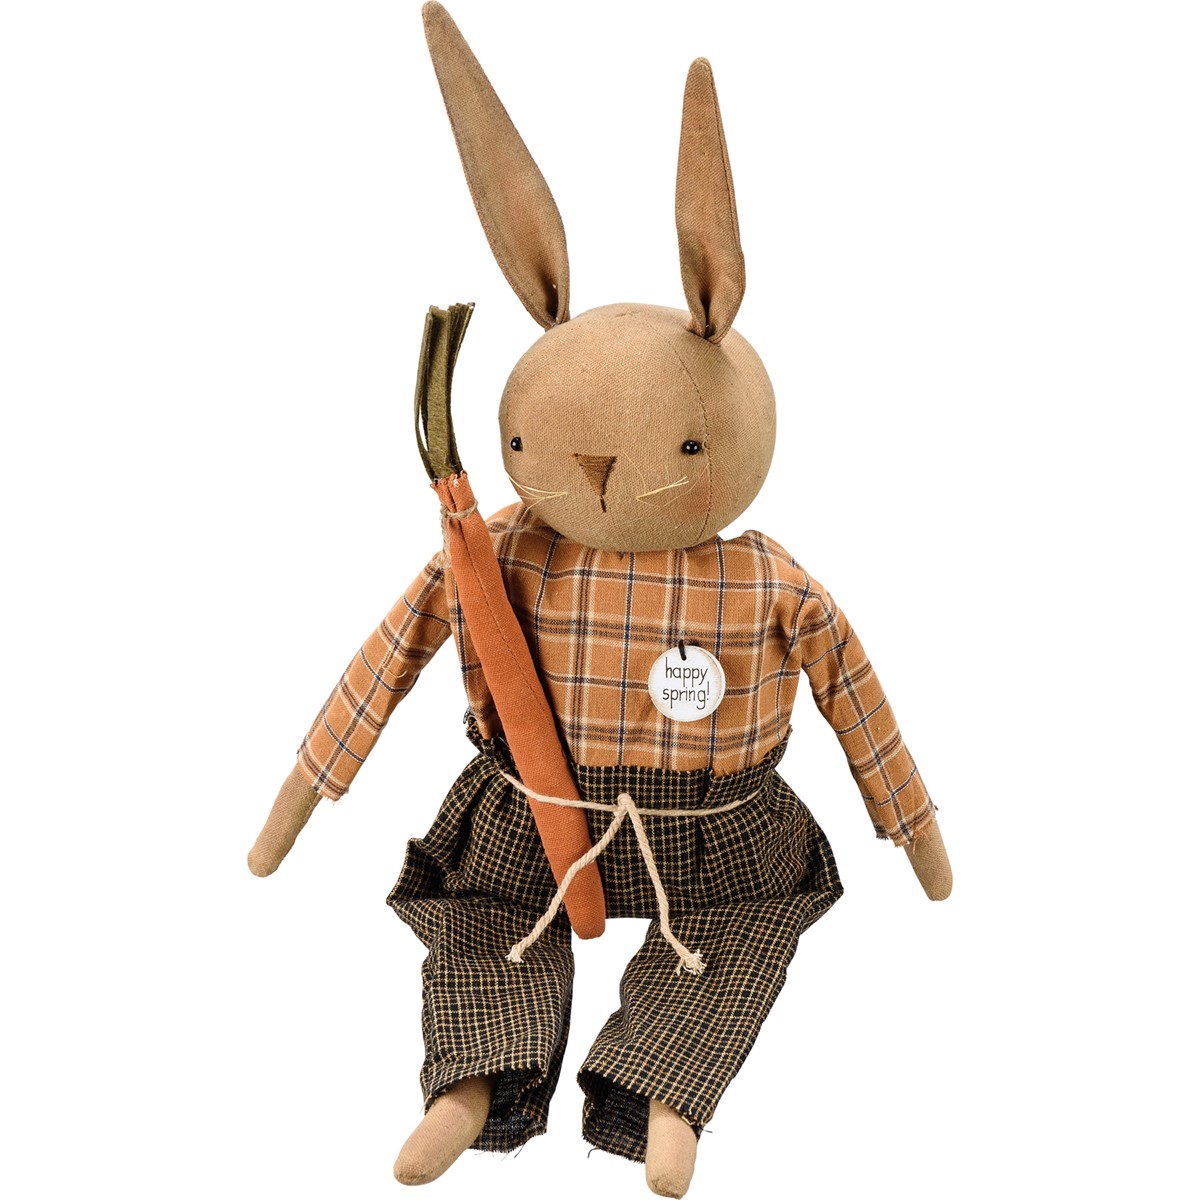 Jack Rabbit Happy Spring Doll - Cotton, Wood, Plastic